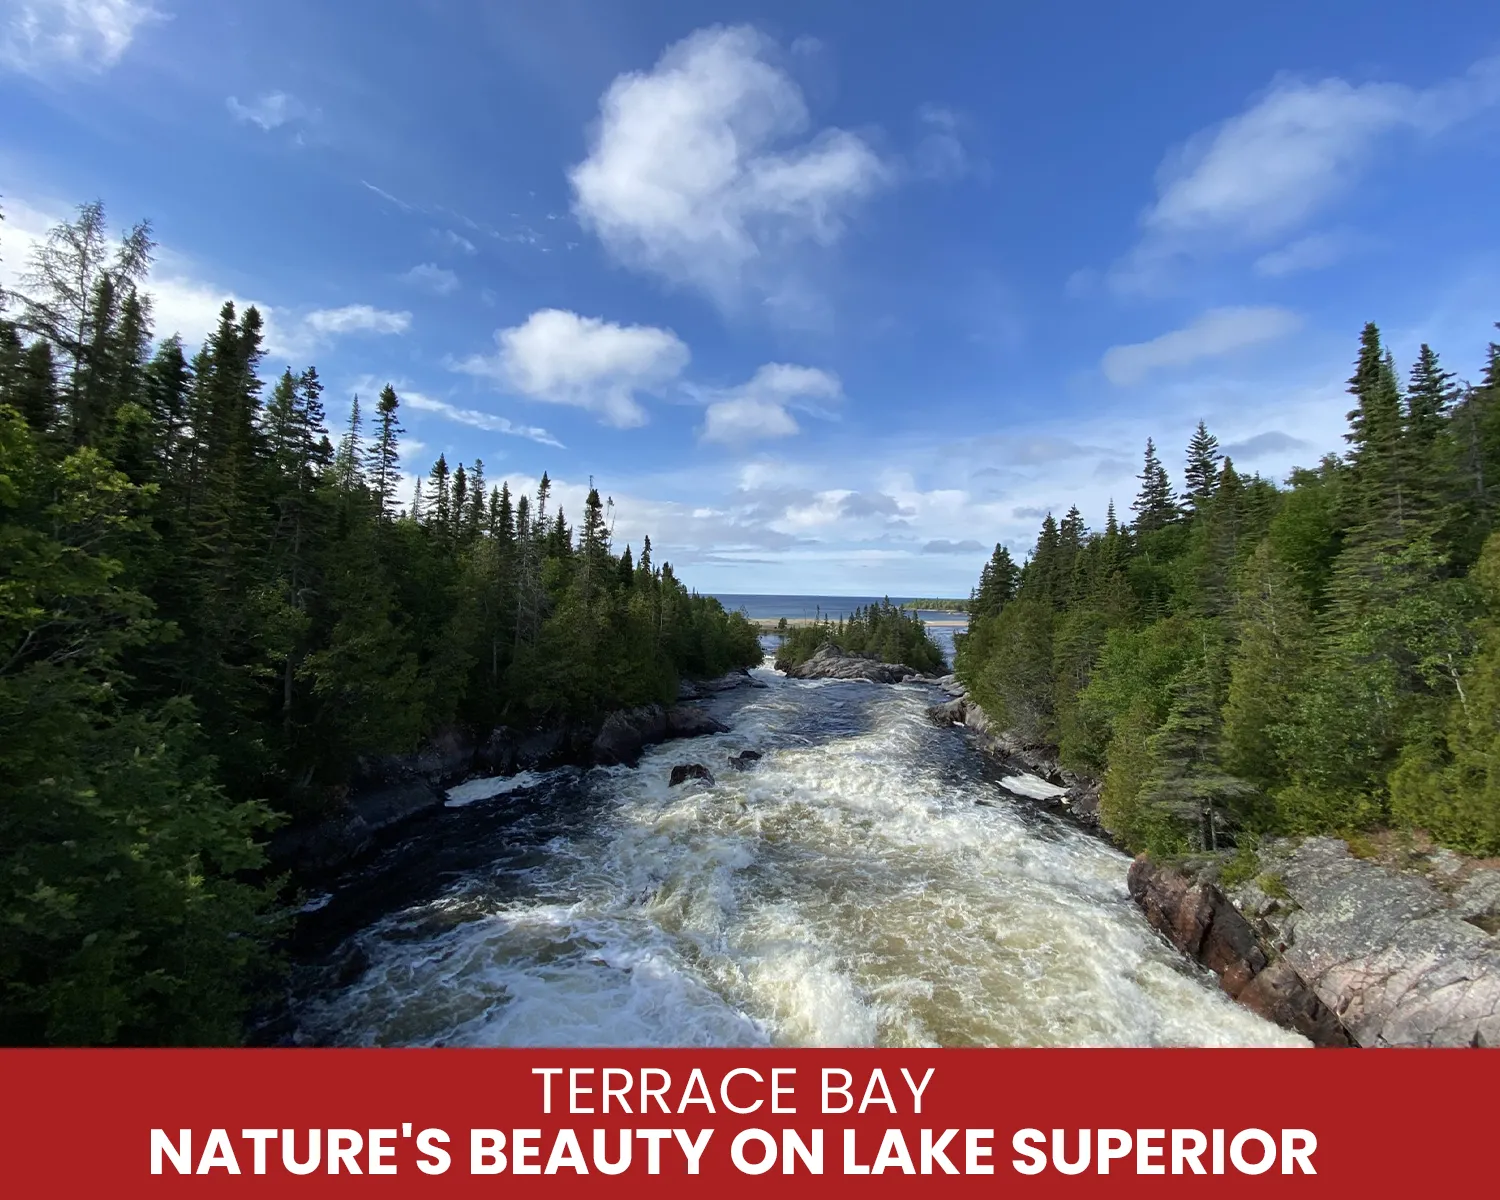 Terrace Bay: Nature's Beauty on Lake Superior